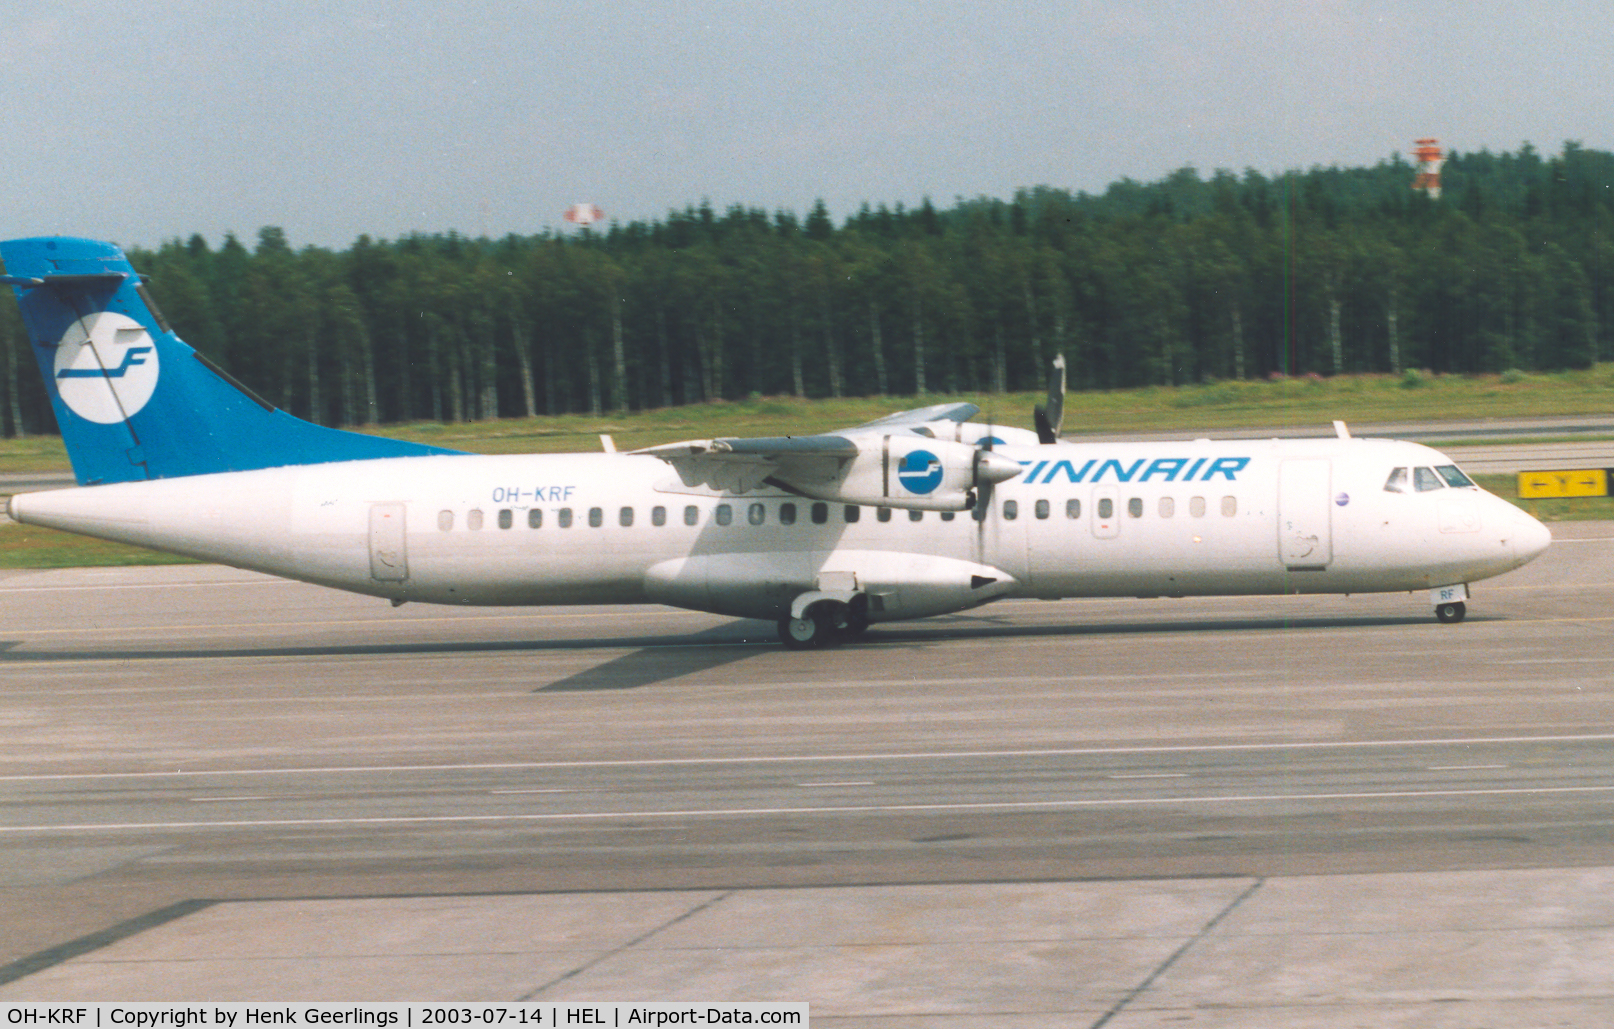 OH-KRF, 1992 ATR 72-201 C/N 324, Finnair